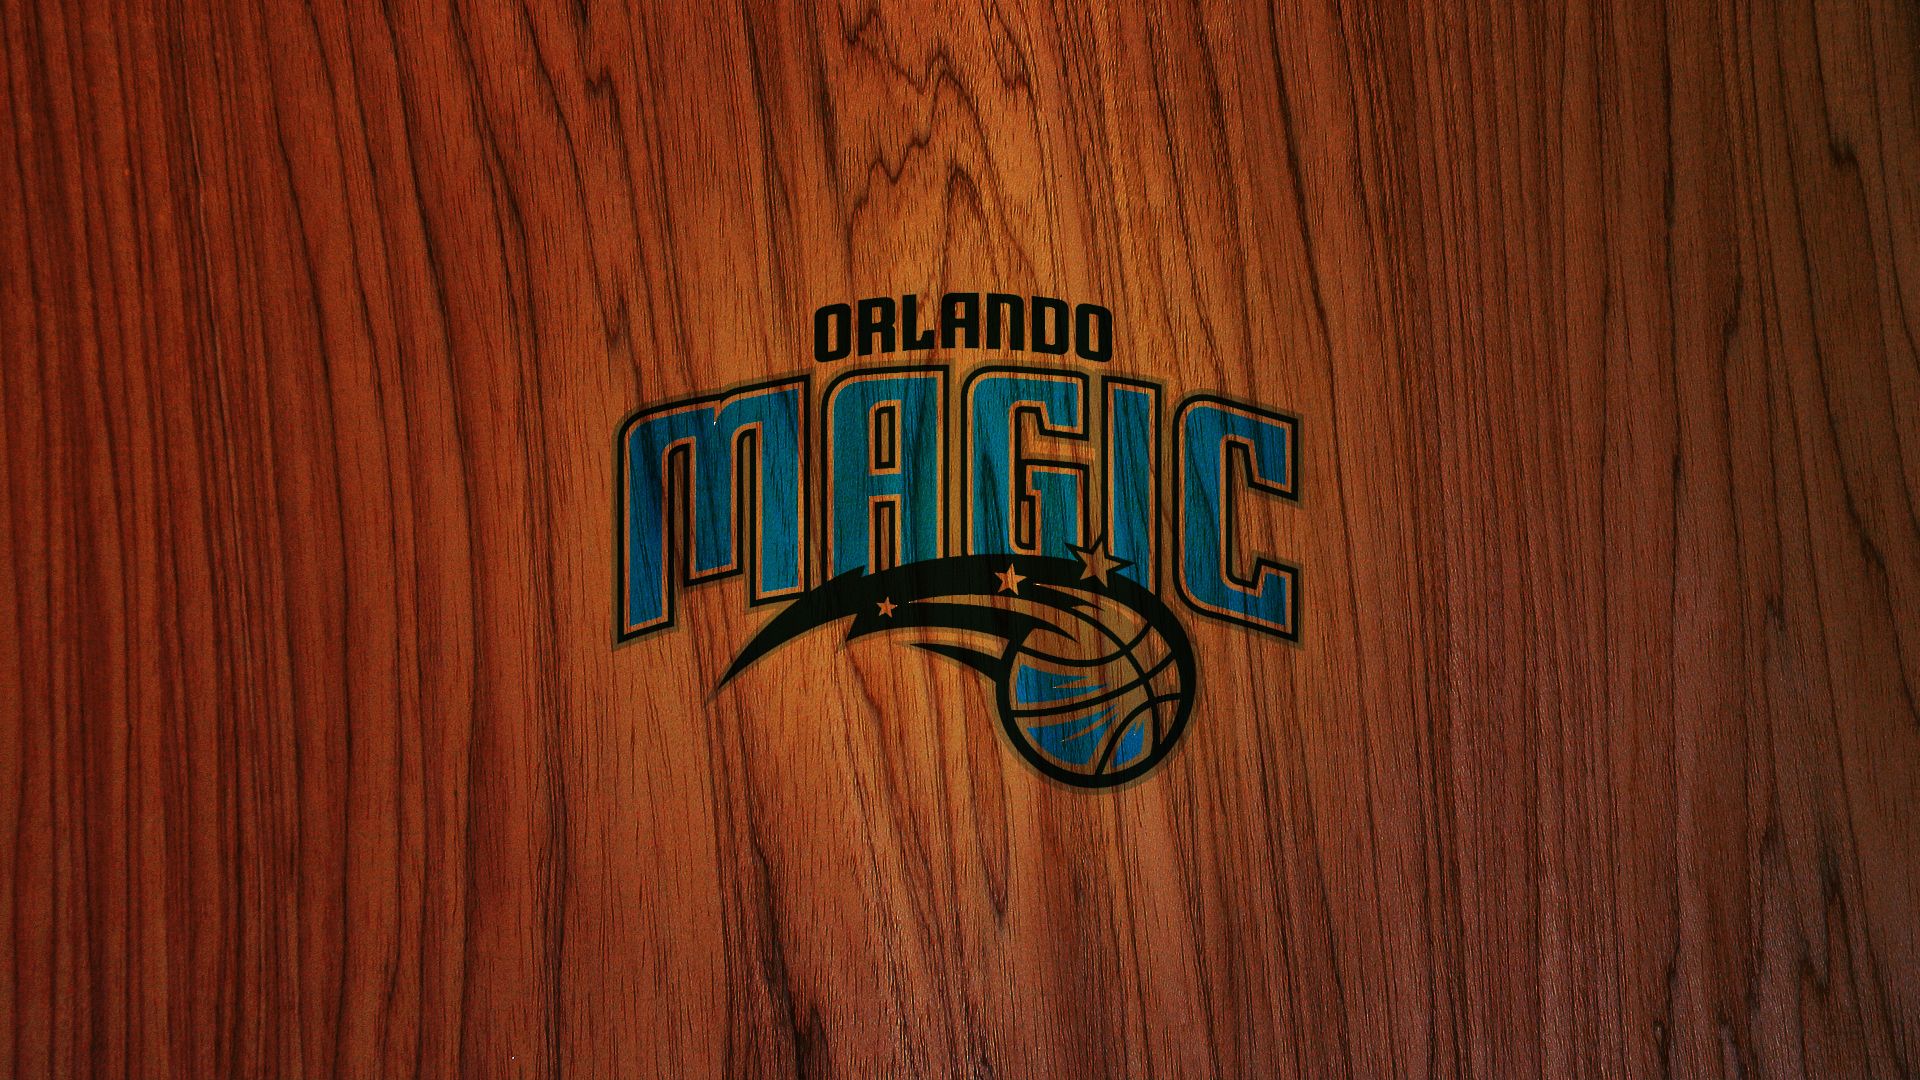 Orlando Magic #217875 | Full HD Widescreen wallpapers for desktop ...